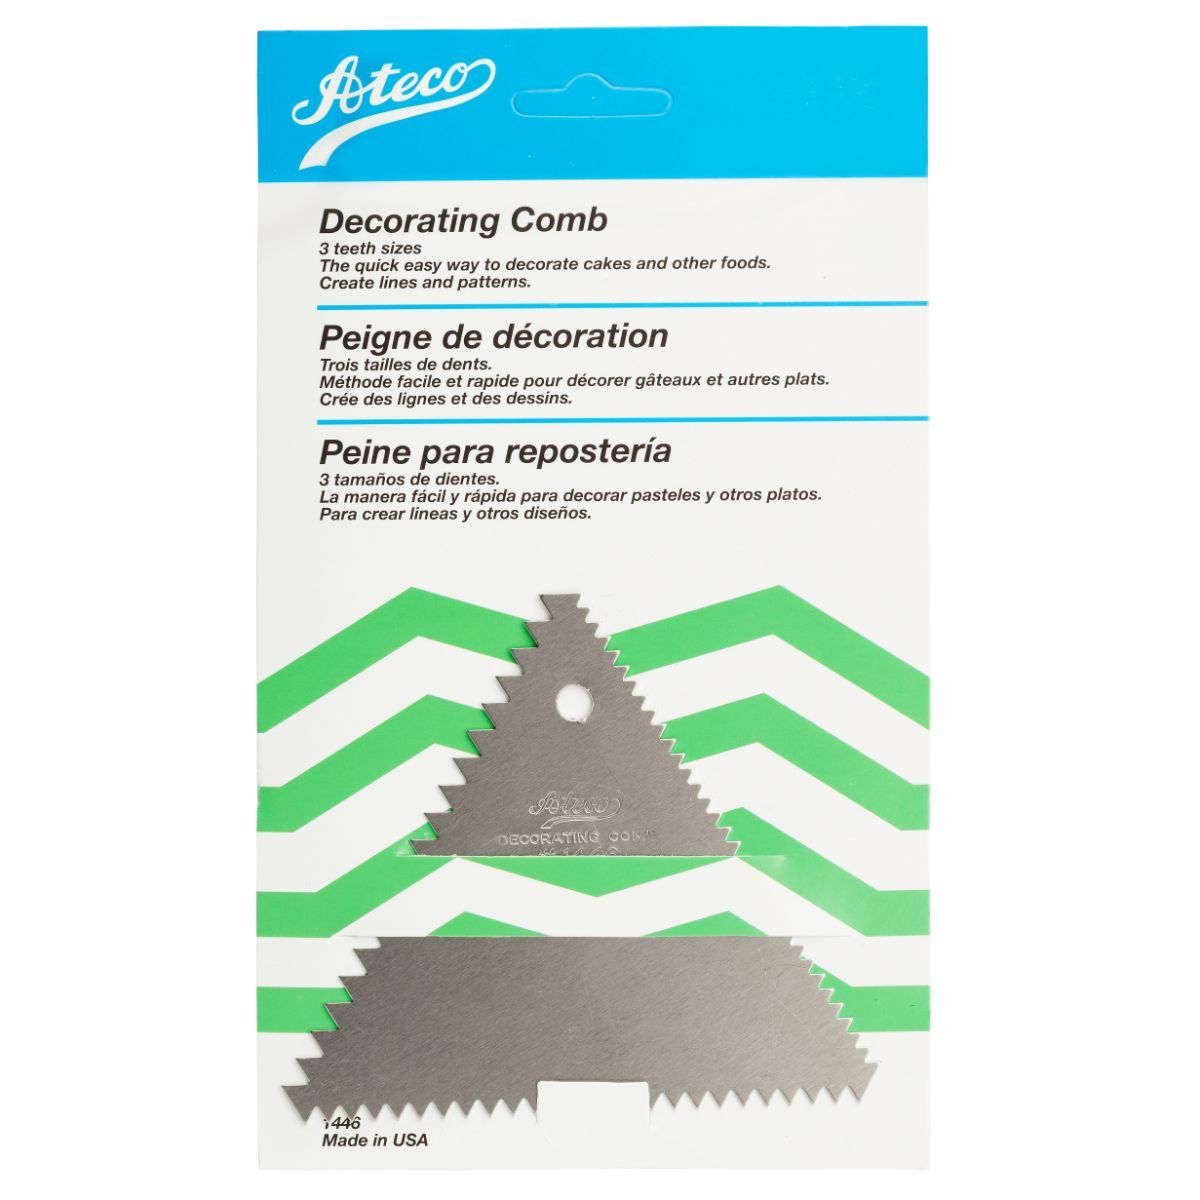 Decorating Comb Ateco Icing Tool - Bake Supply Plus